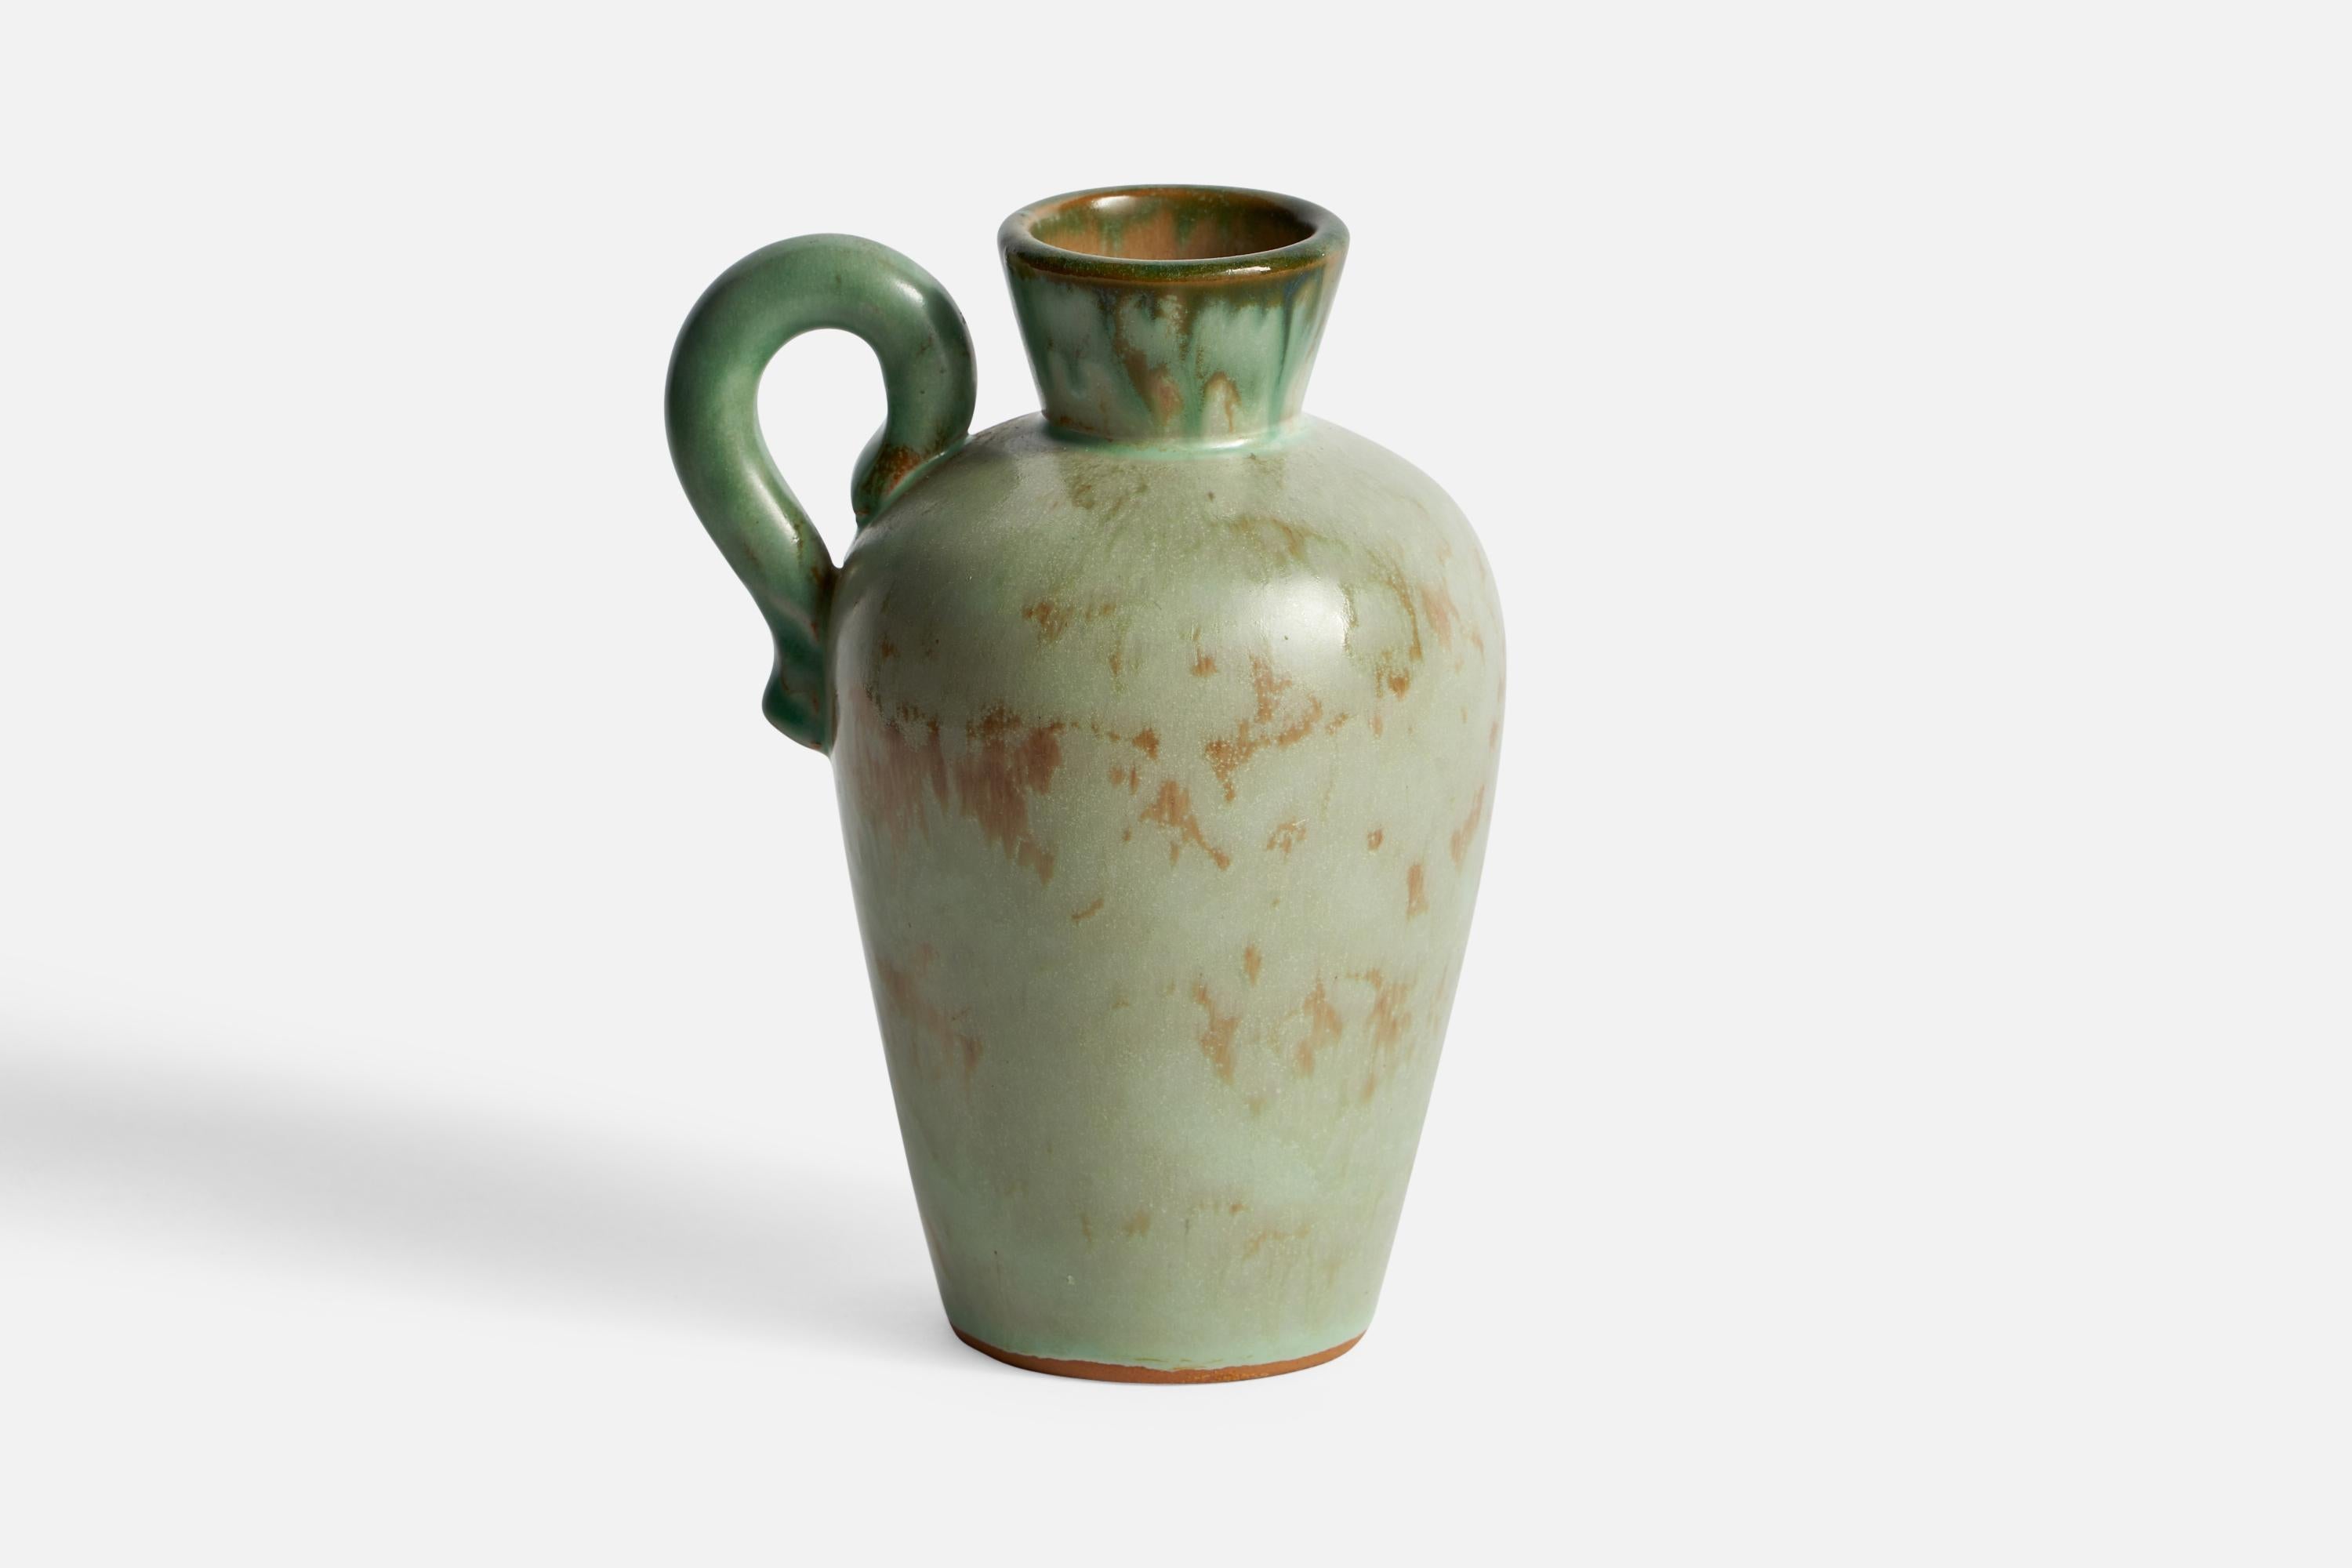 A green-glazed earthenware vase designed by Christer Heijl and produced by Töreboda Keramik, Sweden, 1930s.